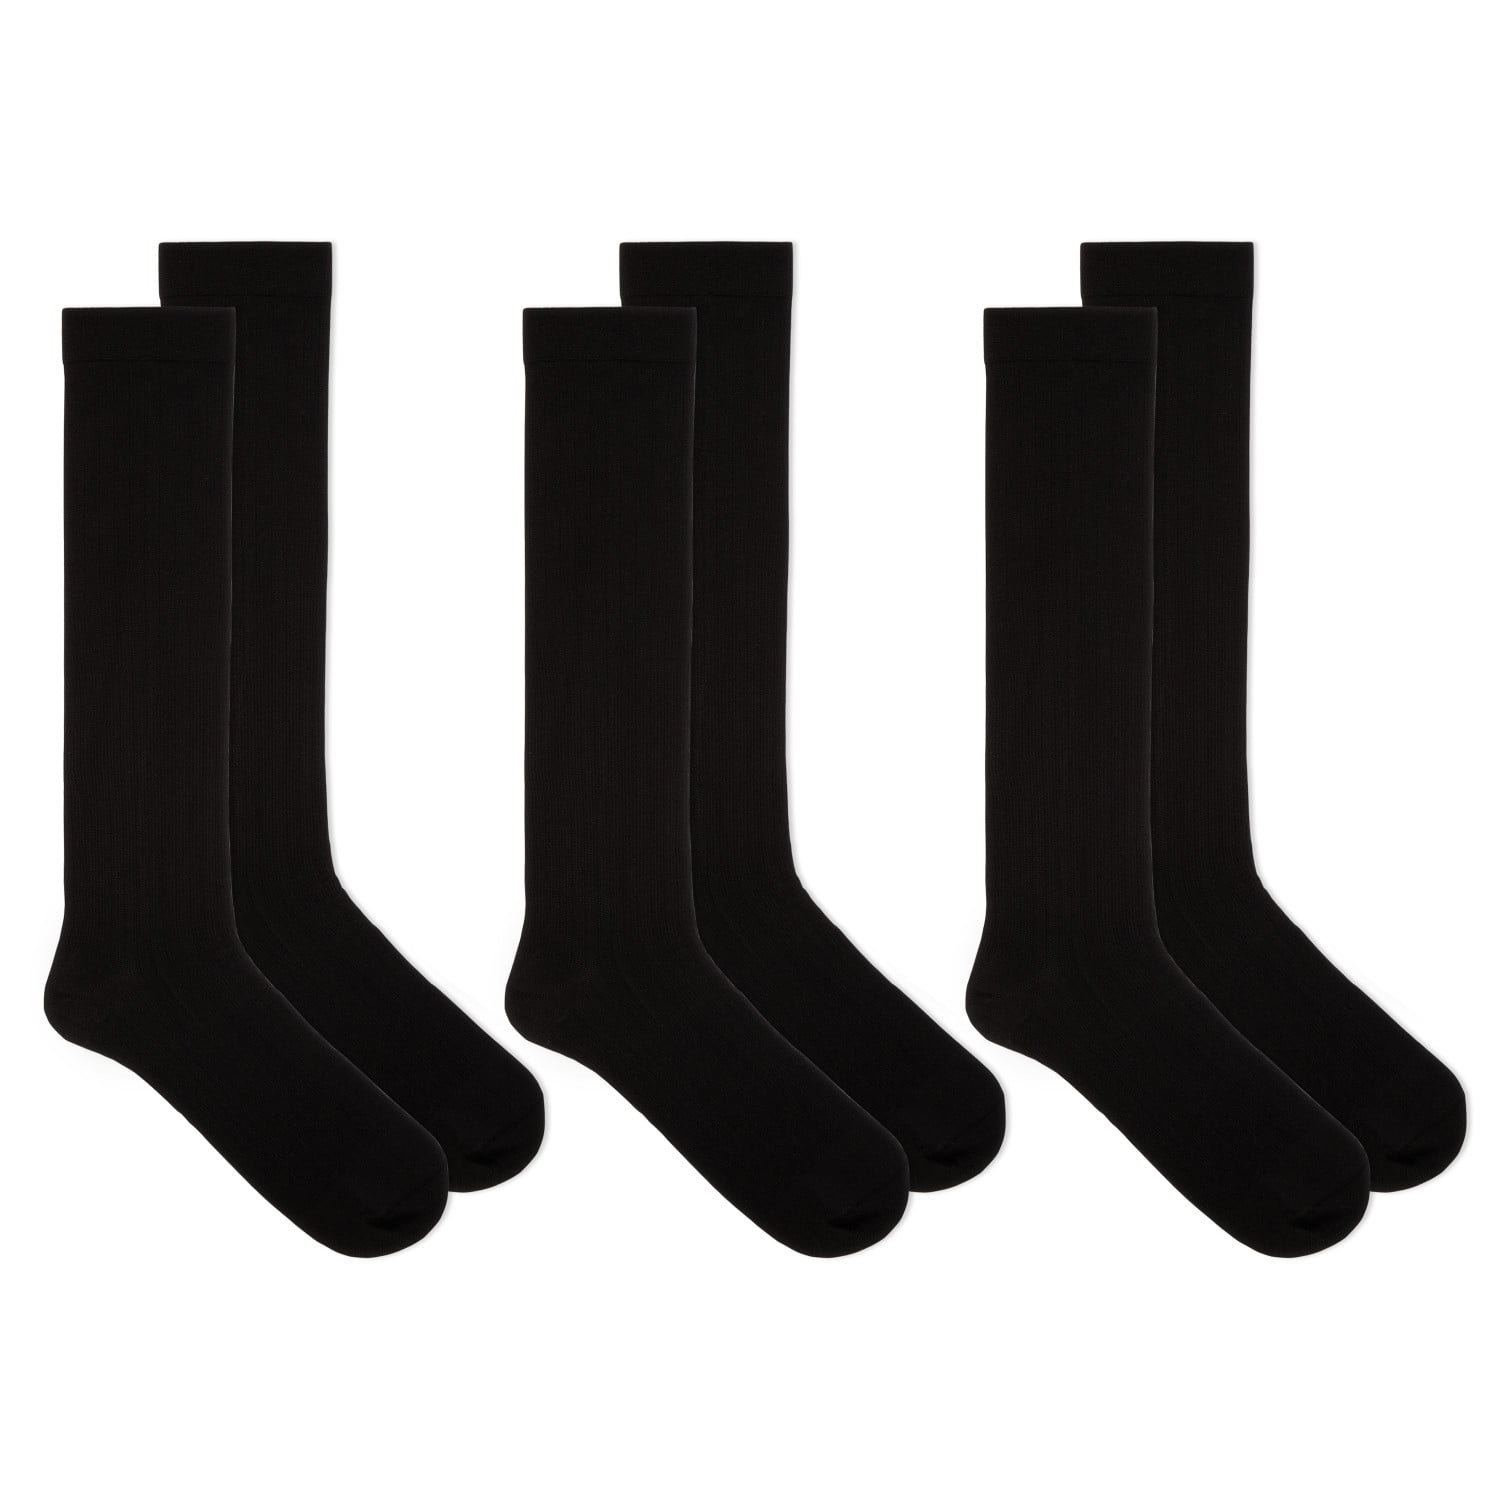 Buy Dr. Scholl's Black Graduated Compression Support Socks for Men at